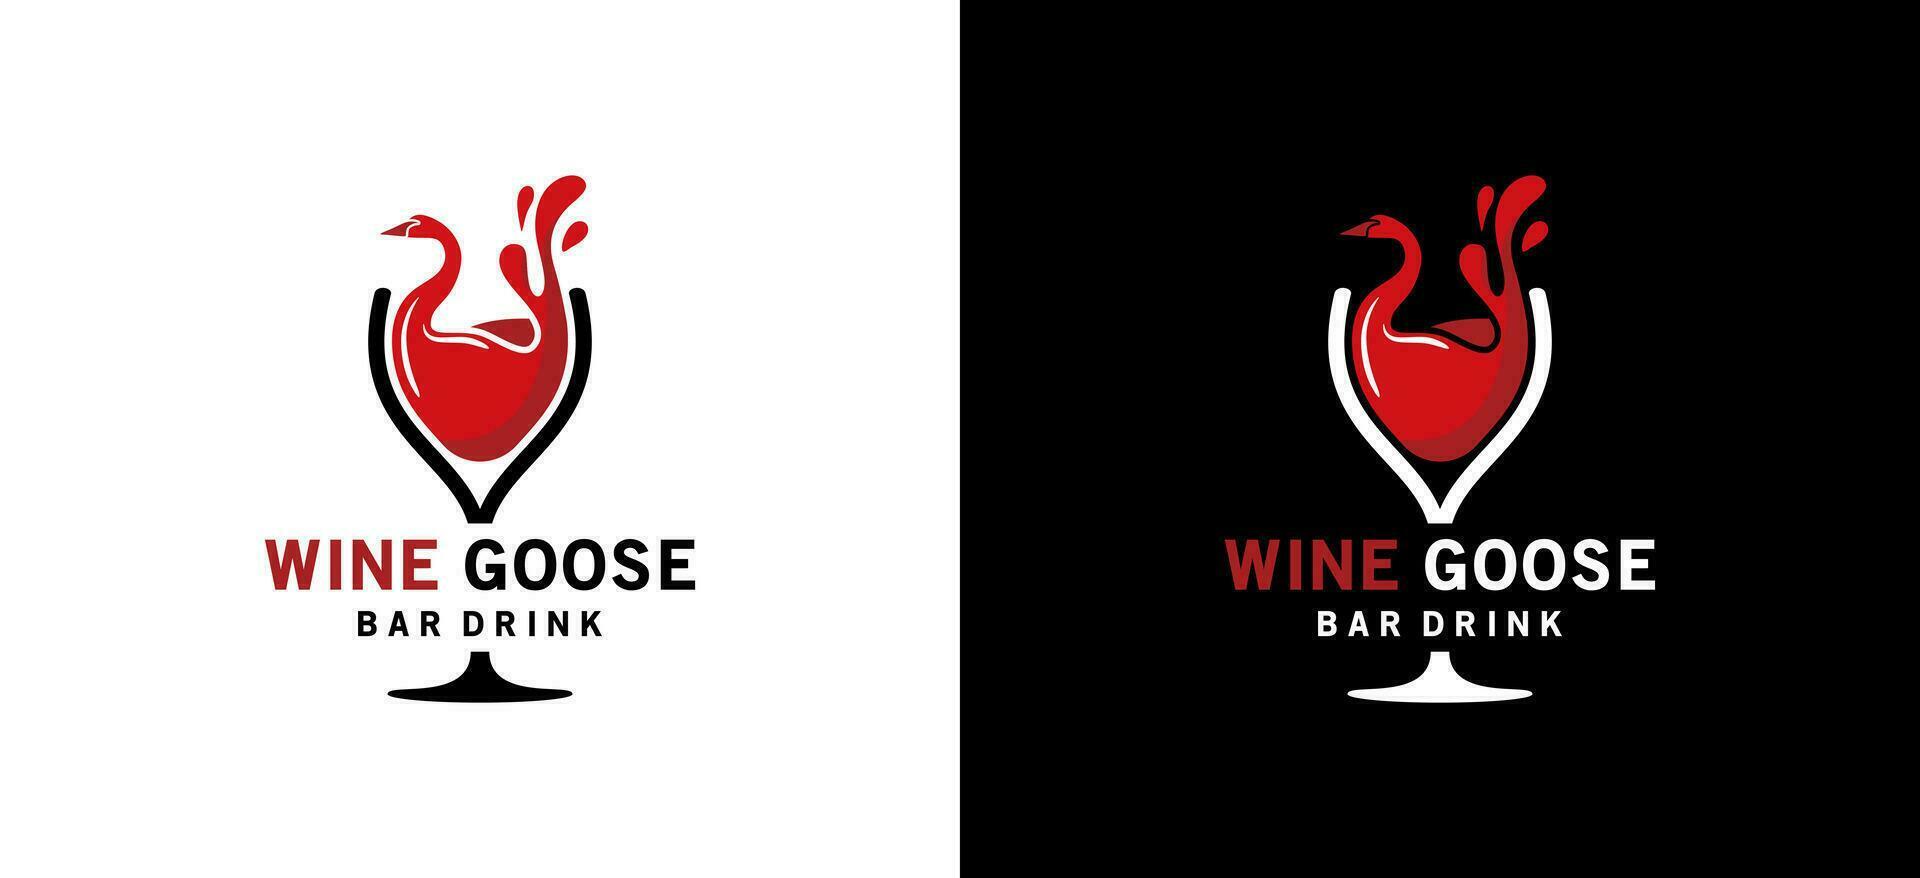 Goose wine logo design with creative concept vector